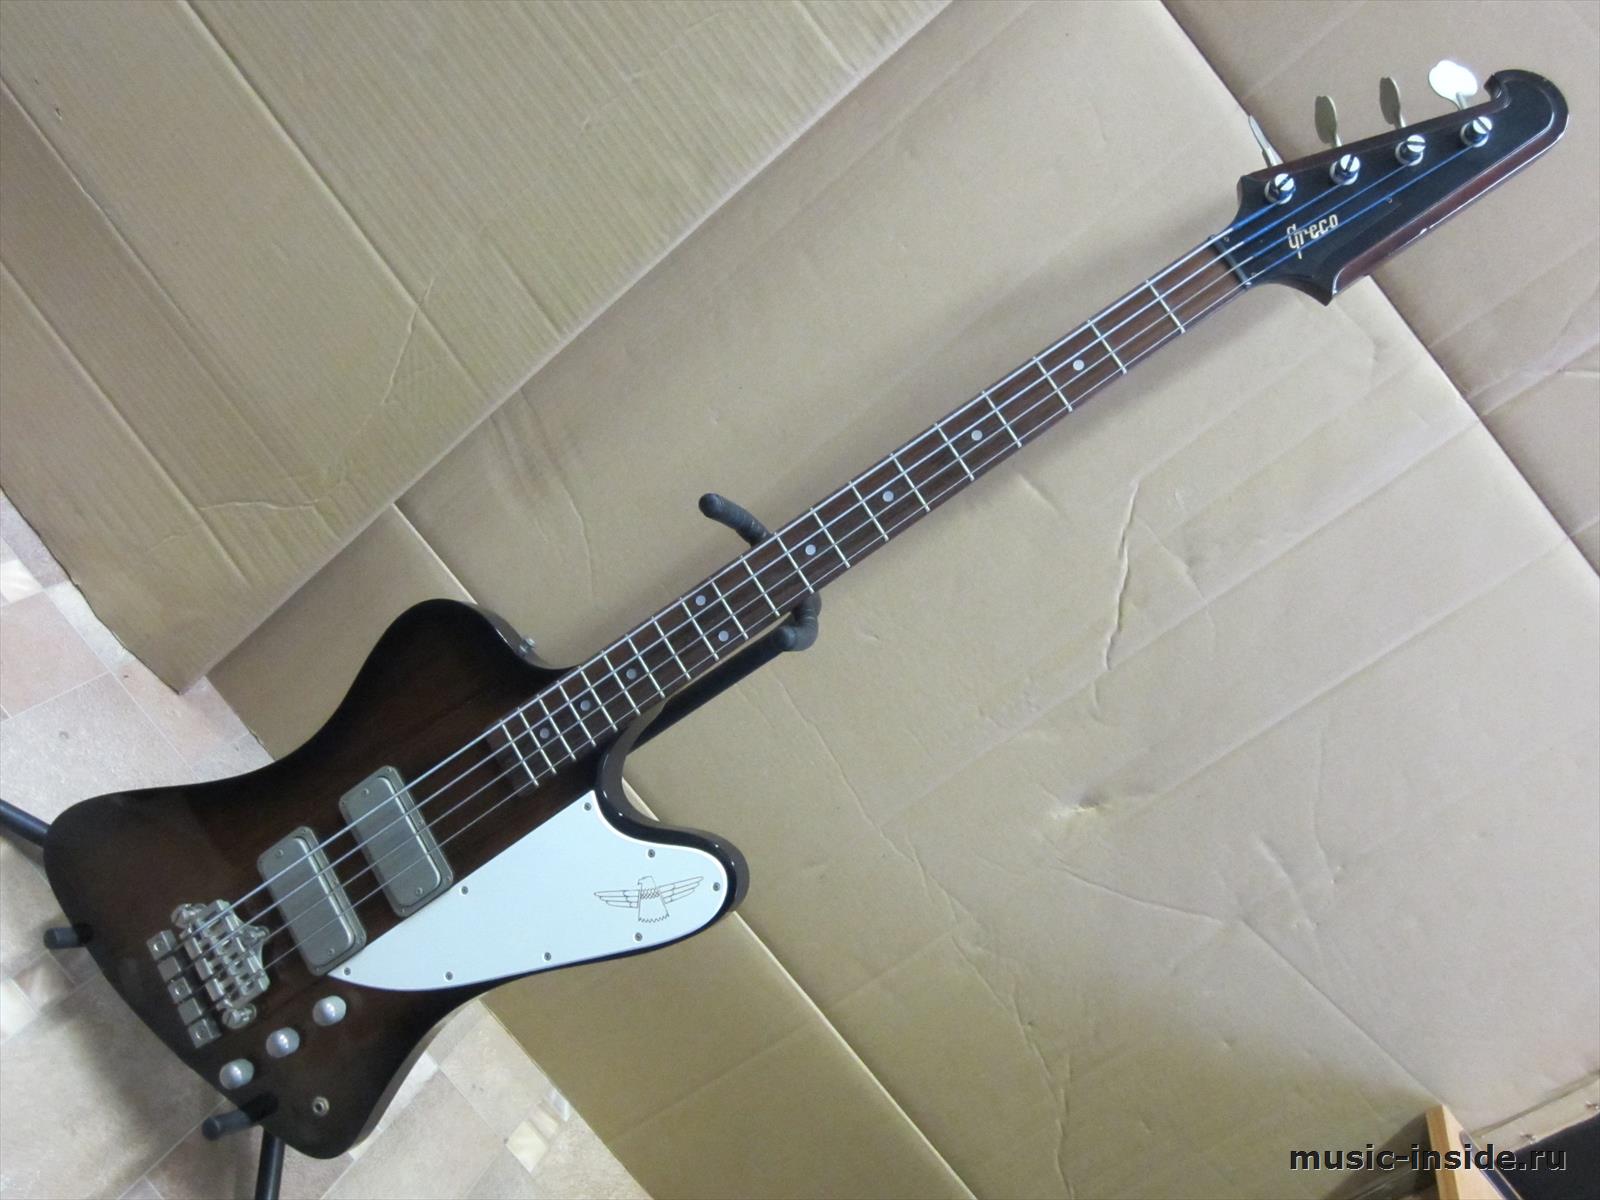 Greco TB-750 бас-гитара #1045 (1990 Япония)